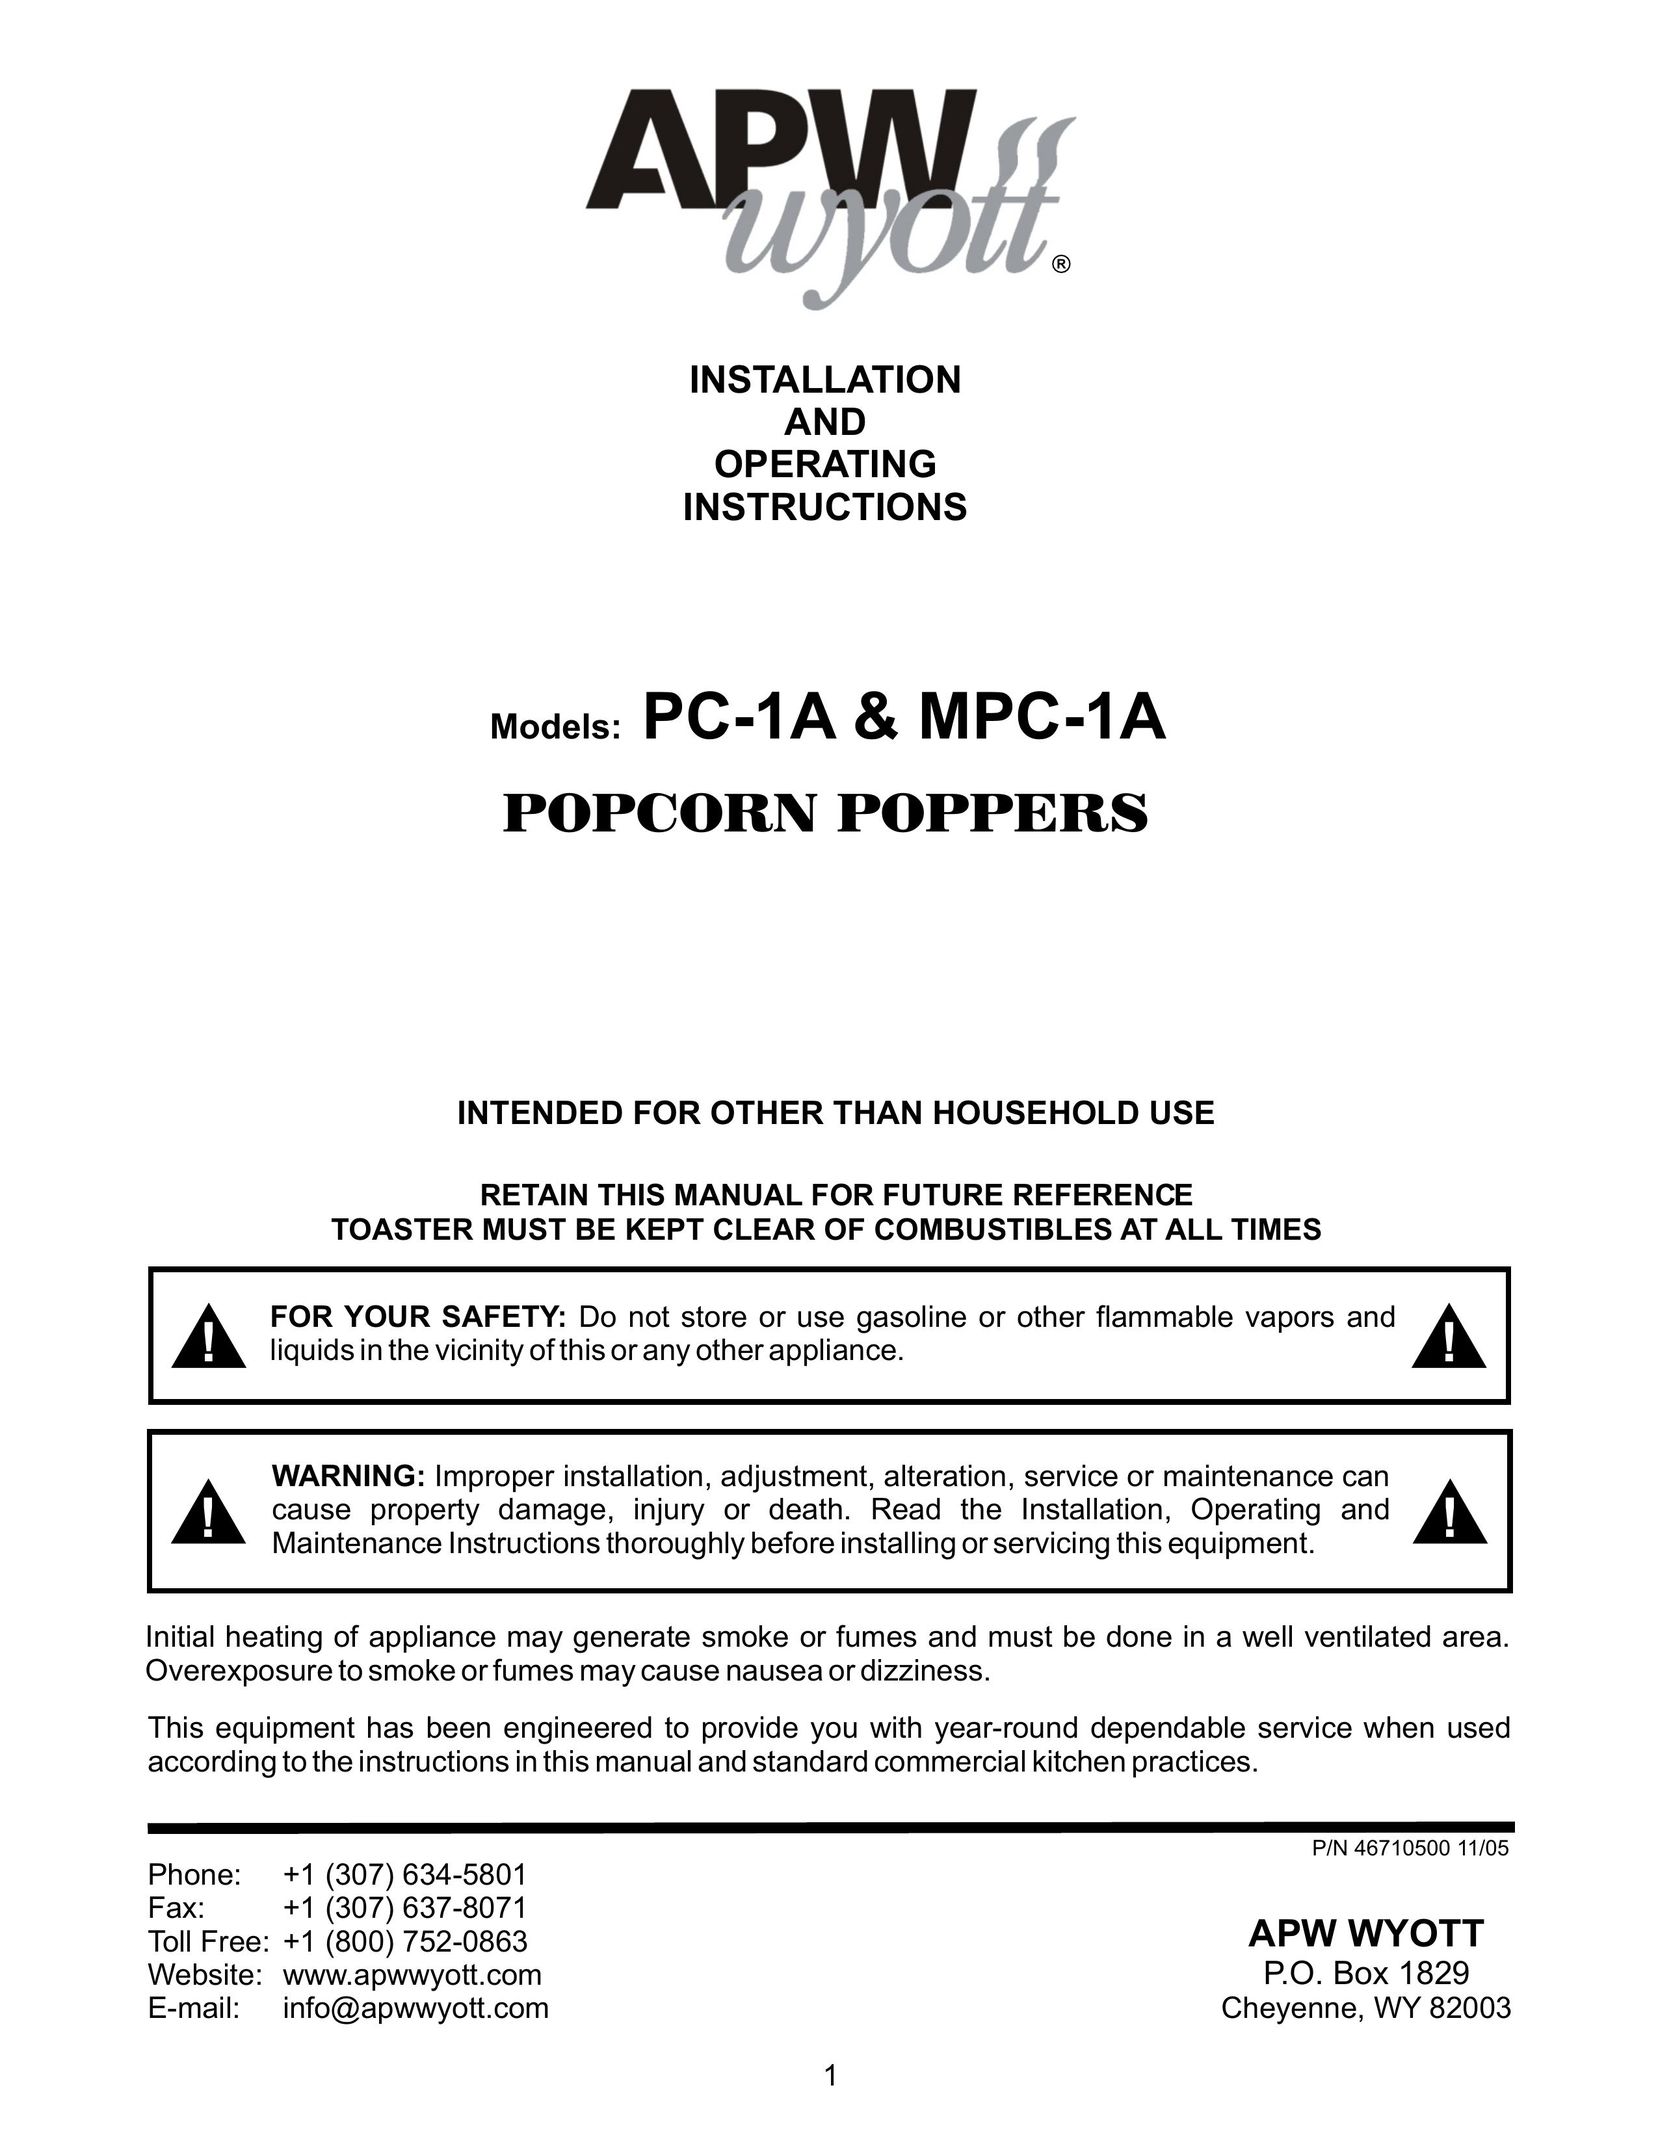 APW Wyott MPC-1A Popcorn Poppers User Manual